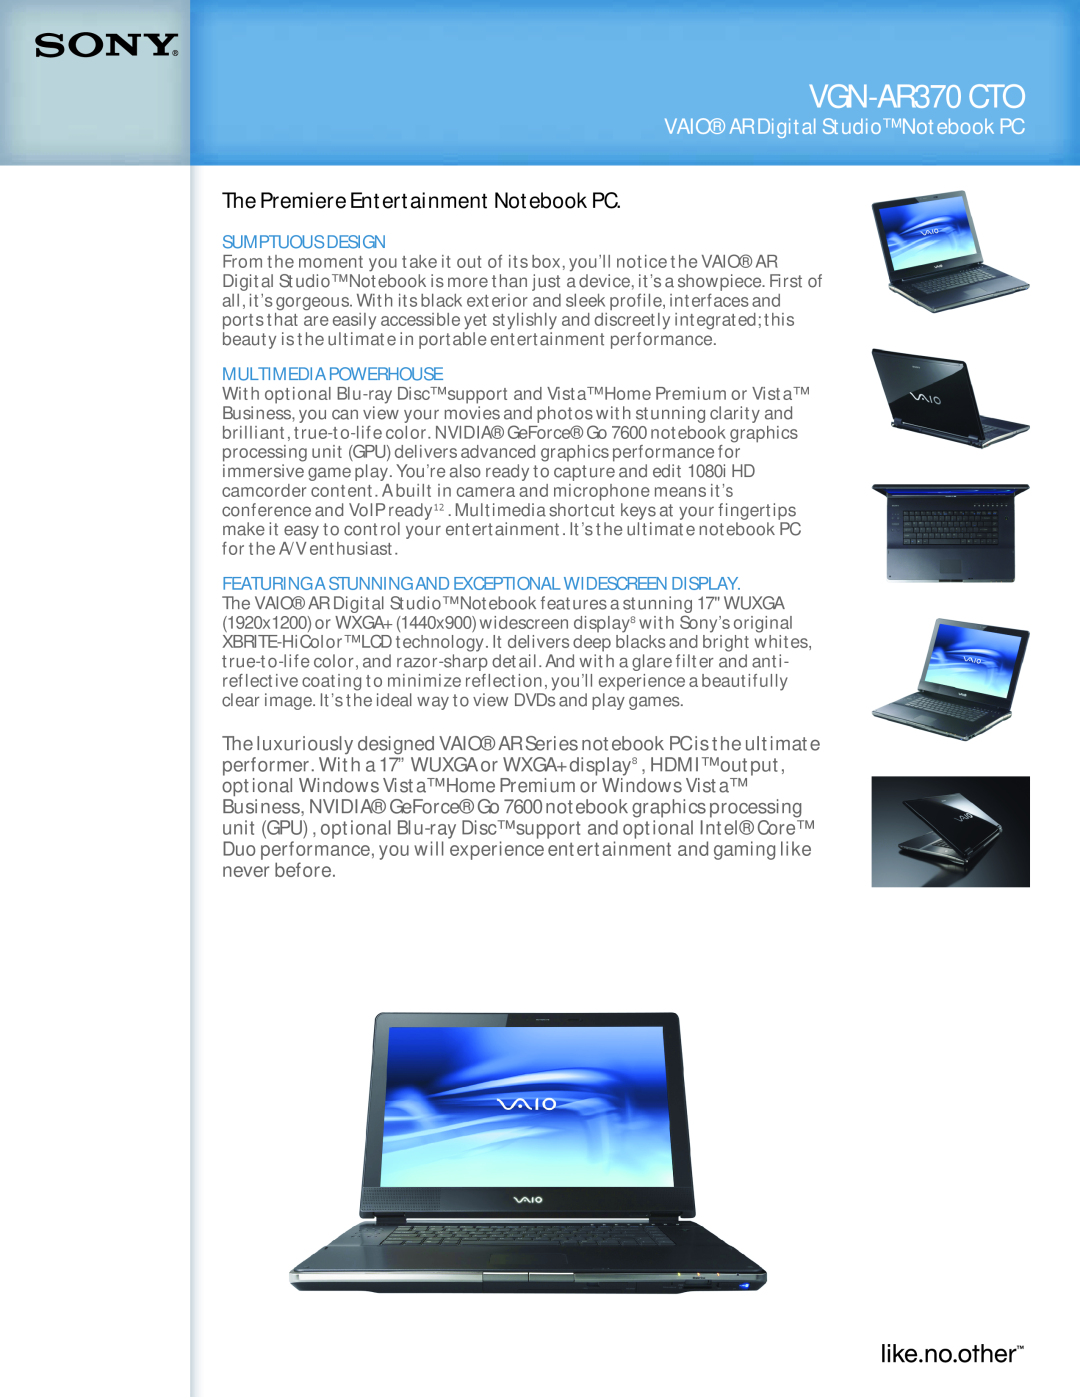 Sony VGN-AR370 CTO manual VAIOAR Digital Studio Notebook PC, The Premiere Entertainment Notebook PC, Sumptuous Design 